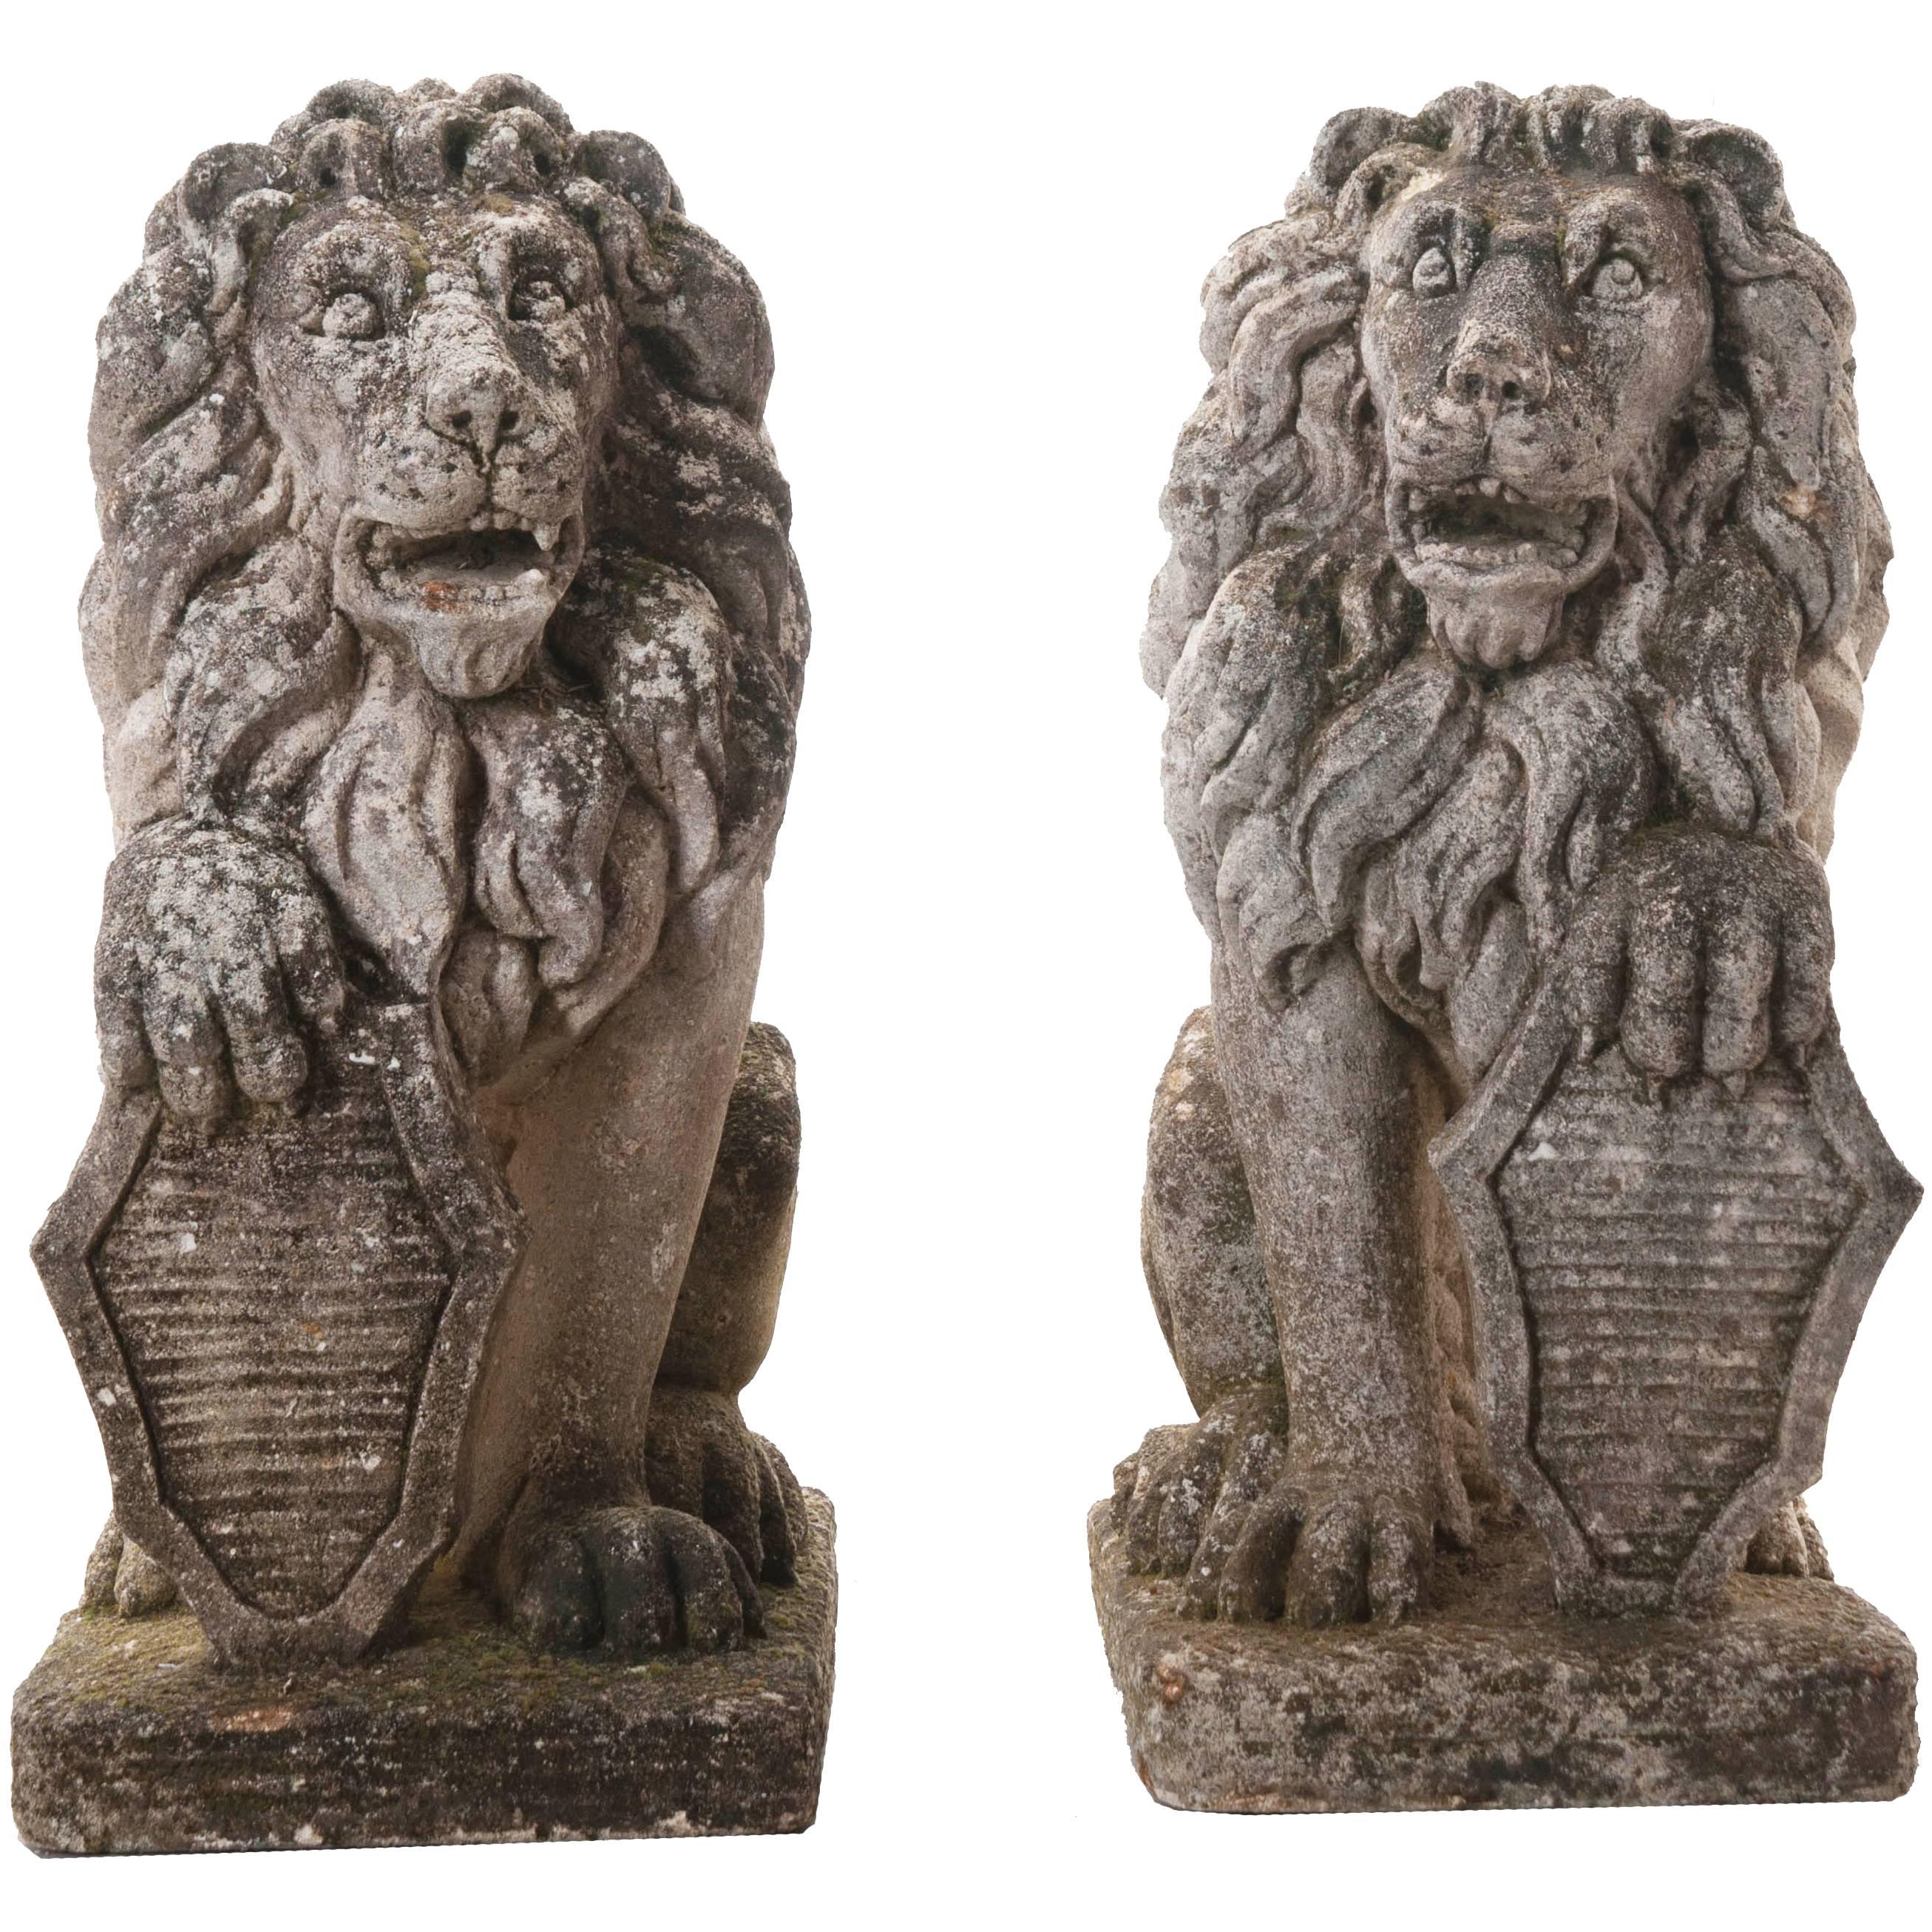 Pair of 19th Century English Stone Lions